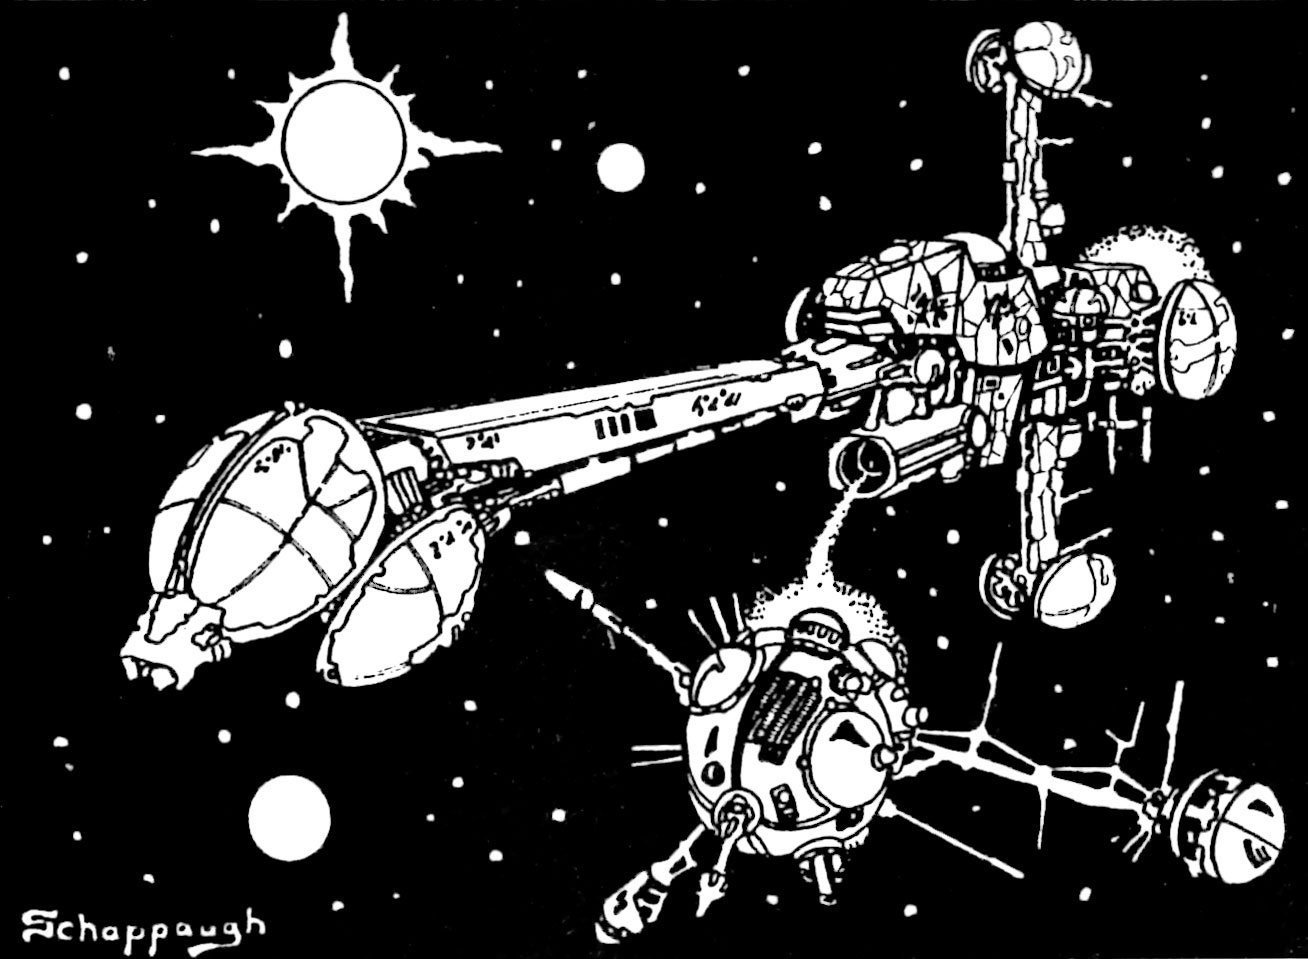  Retro black ink illustration of a Phantatwain Scout Class starship launching a stellar probe. Artist Tony Shappaugh. 